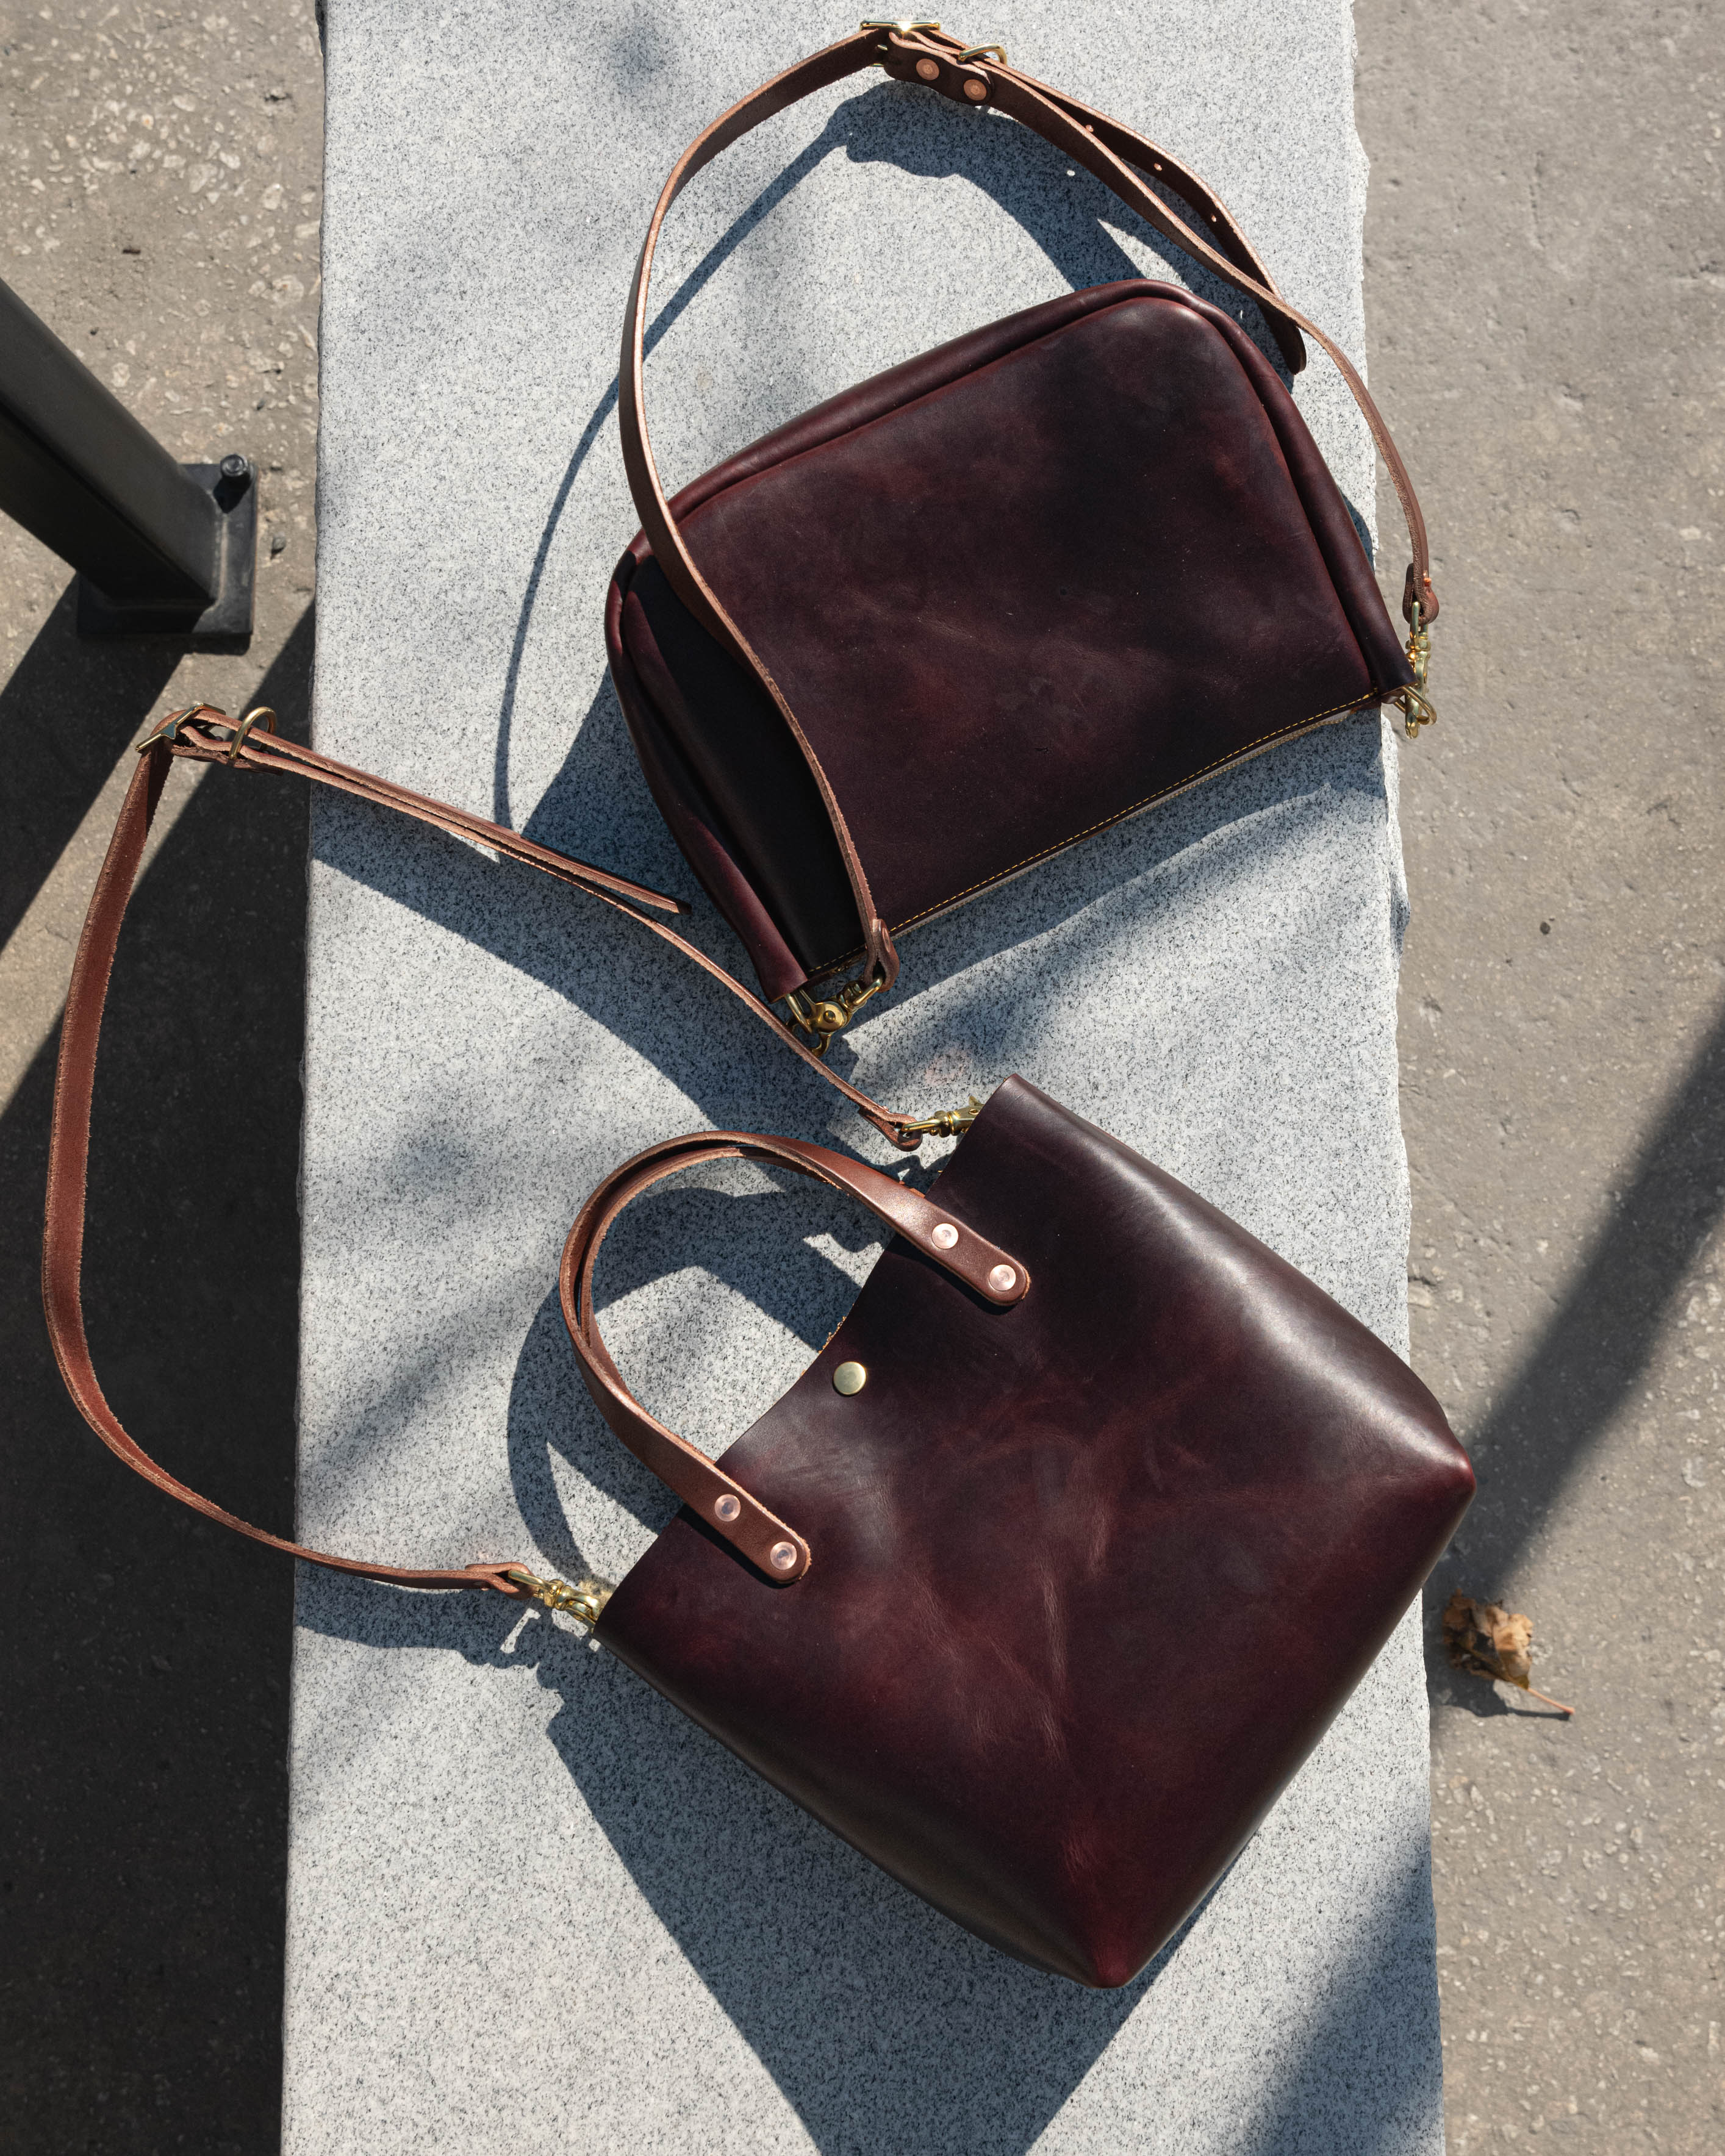 KMM & Co. Oxblood Handmade Leather Tote Bag